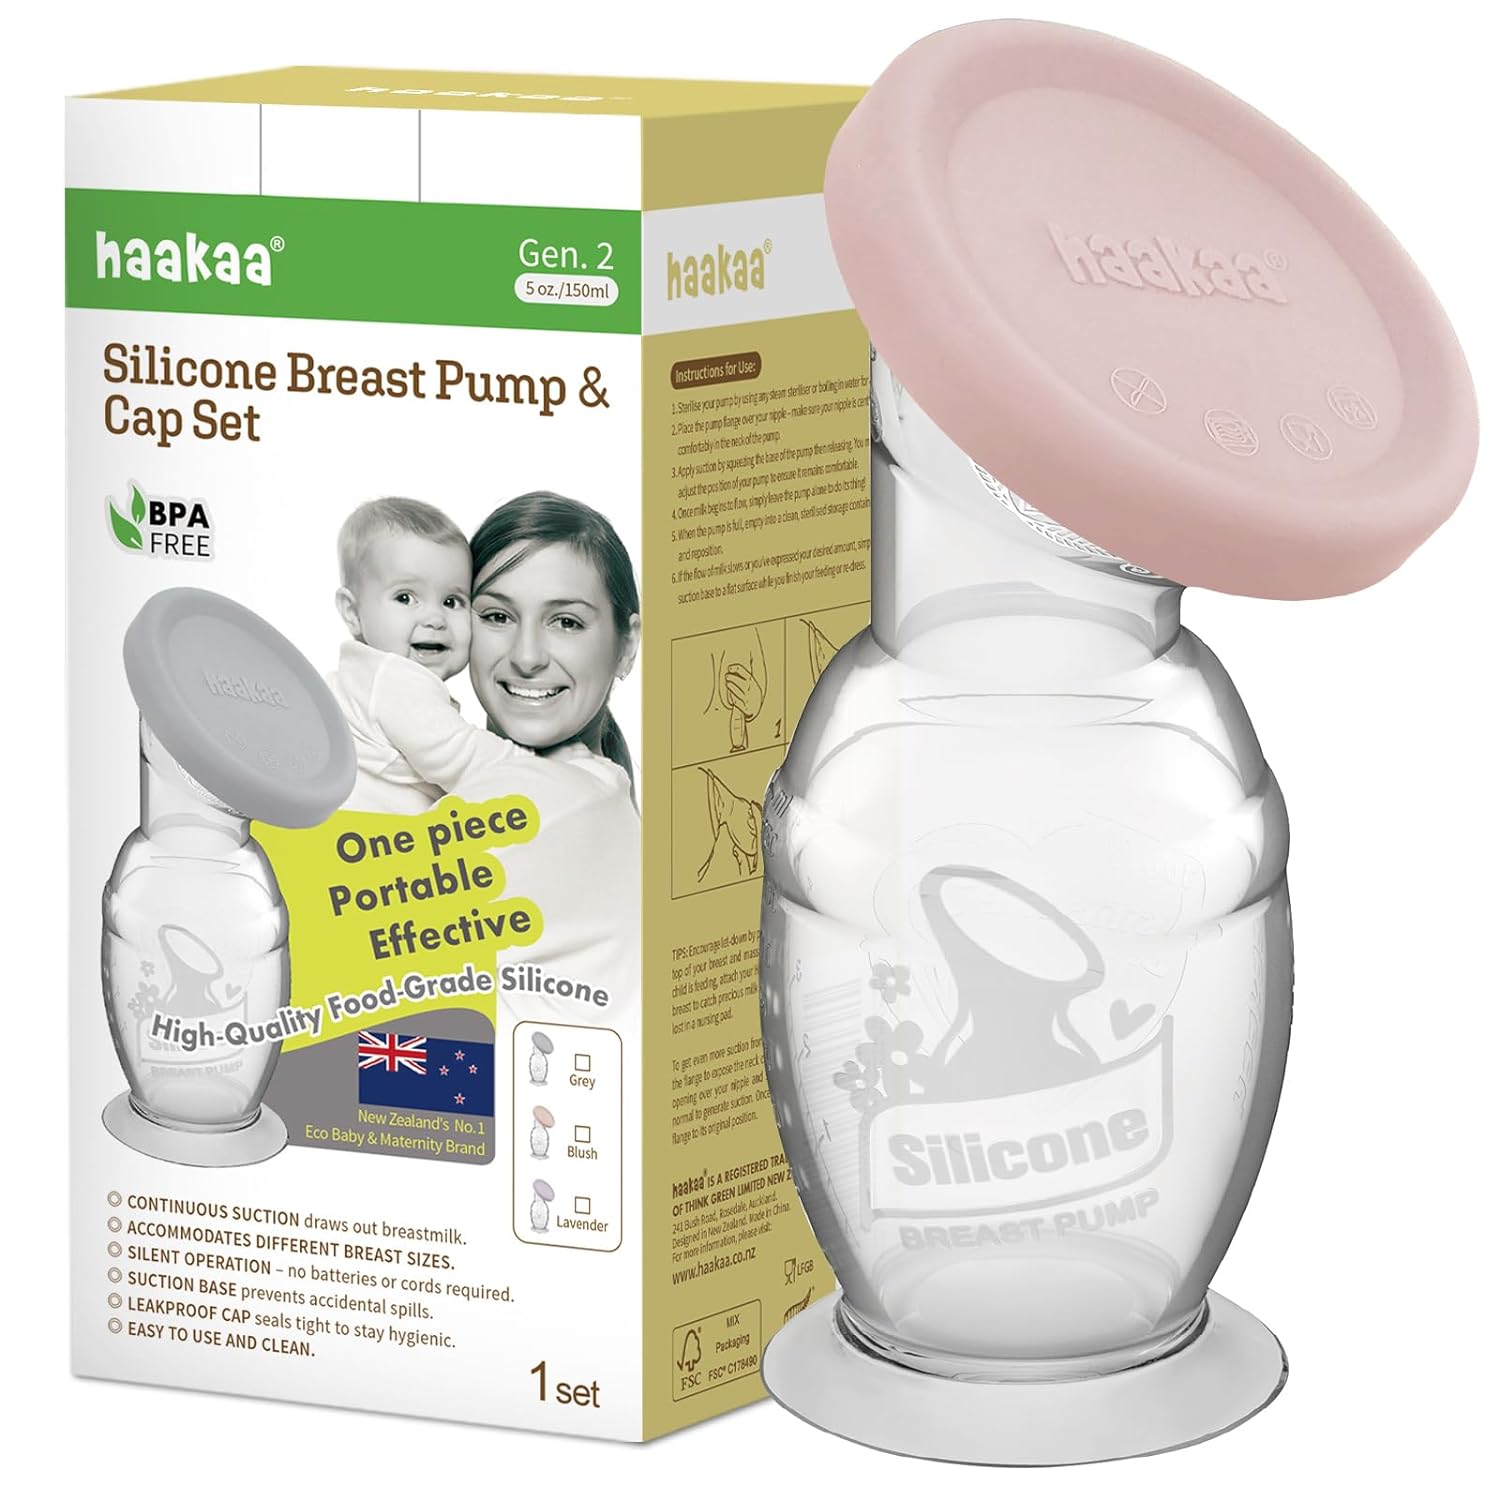 haakaa Silicone Breast Pump & Silicone Cap (Blush) 5oz/150ml, Gen.2